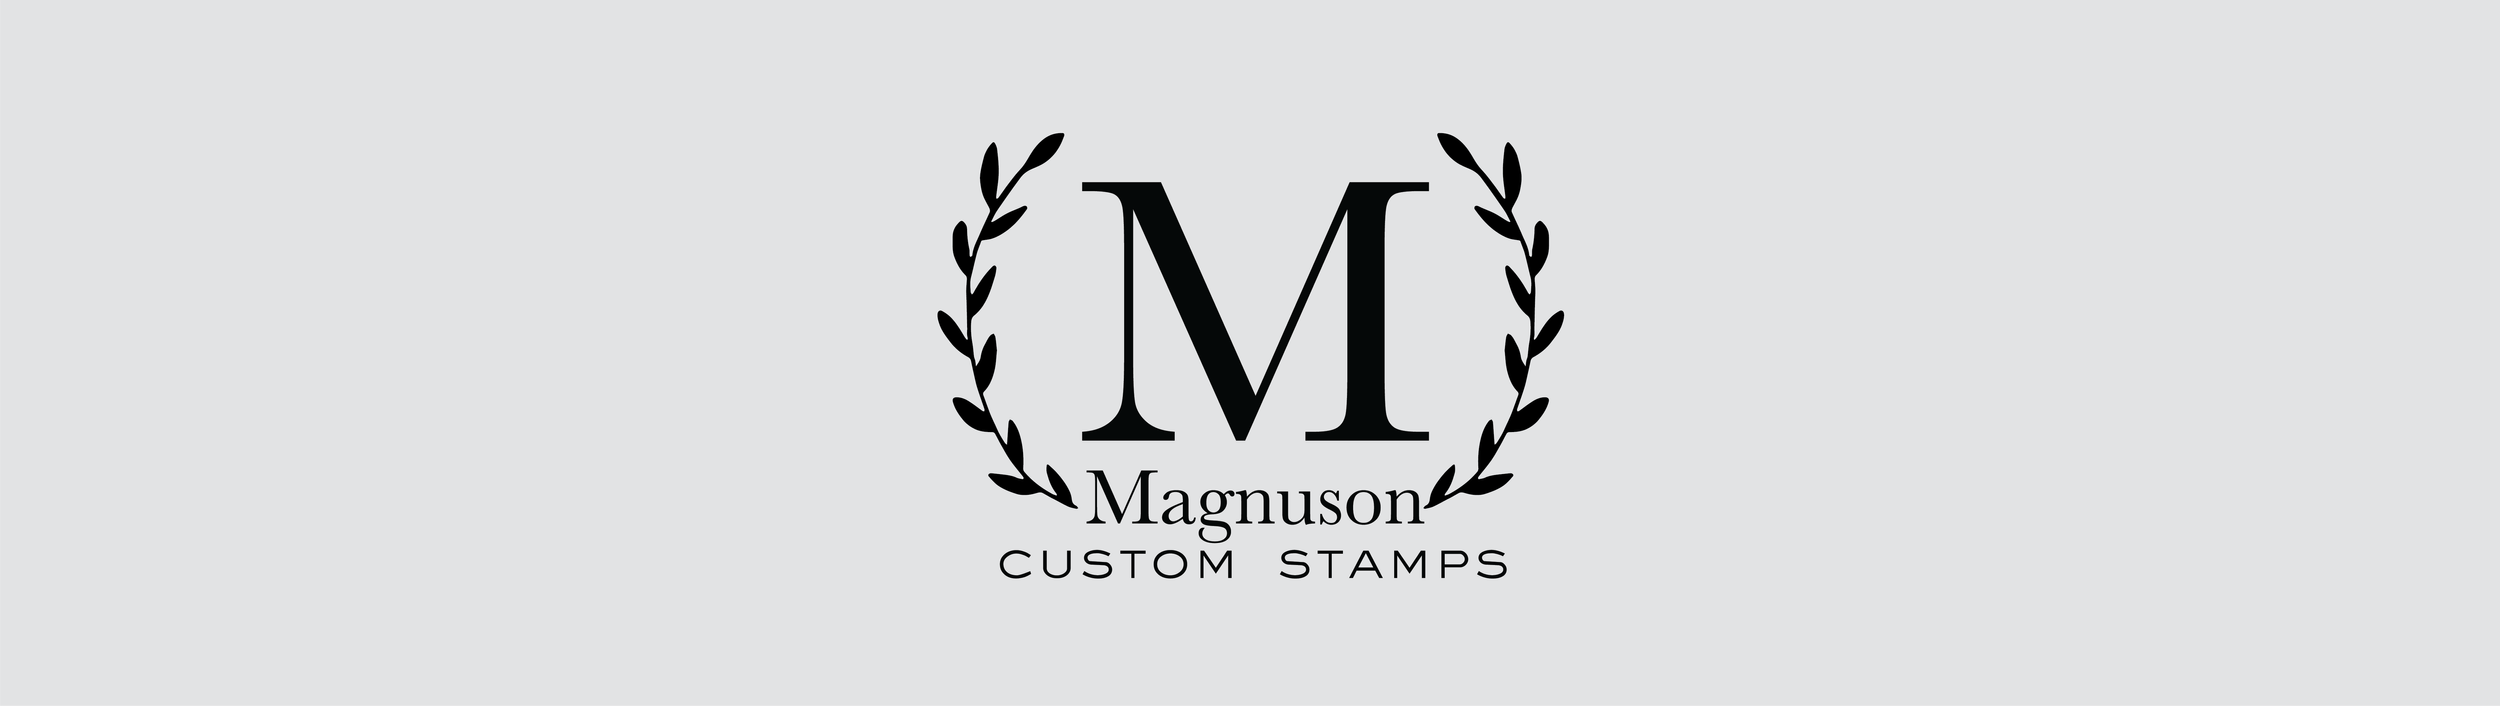 CUSTOM Rubber Stamp, Custom Stamp, Logo Stamp, Personalized Rubber Stamp,  Stamp Logo, Company Stamp, Business Stamp, Business Card Stamp 